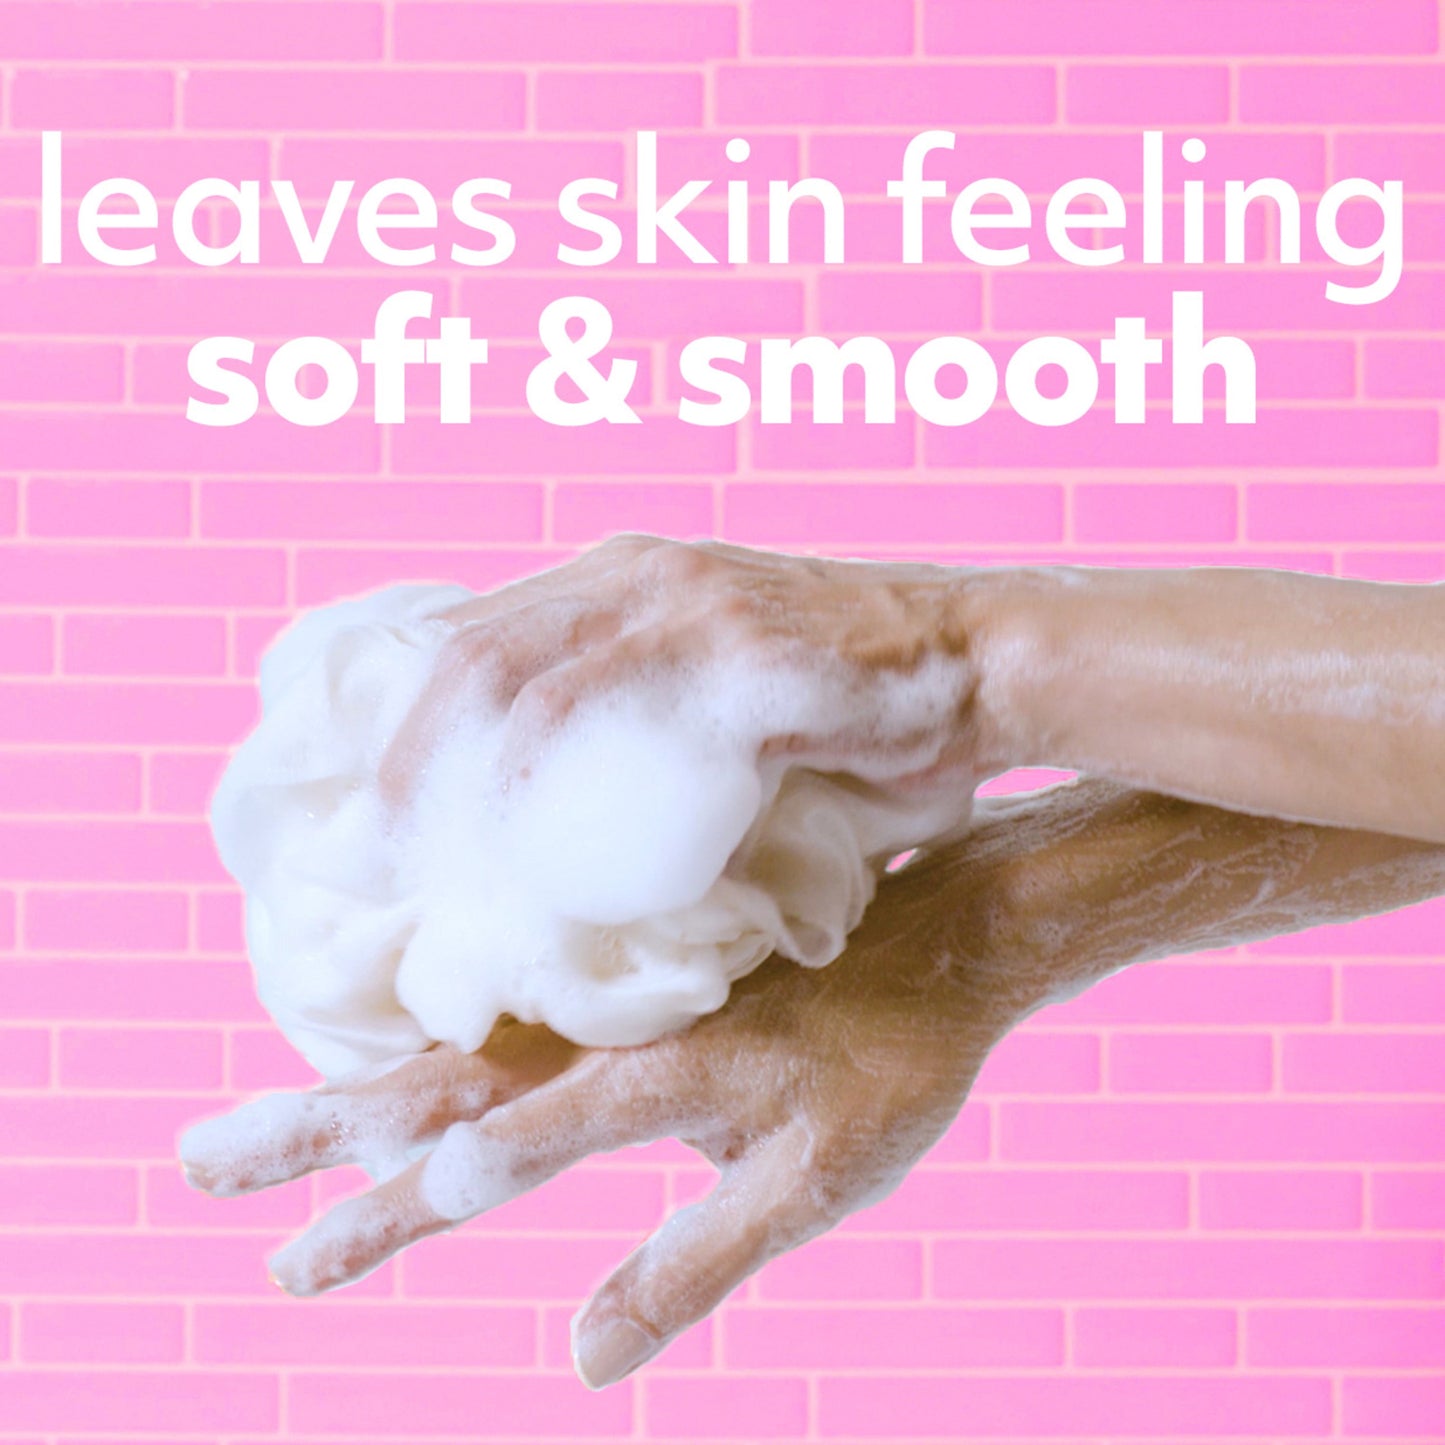 Softsoap Exfoliating Body Wash, Lustrous Glow Pink Rose & Vanilla, 20 Oz